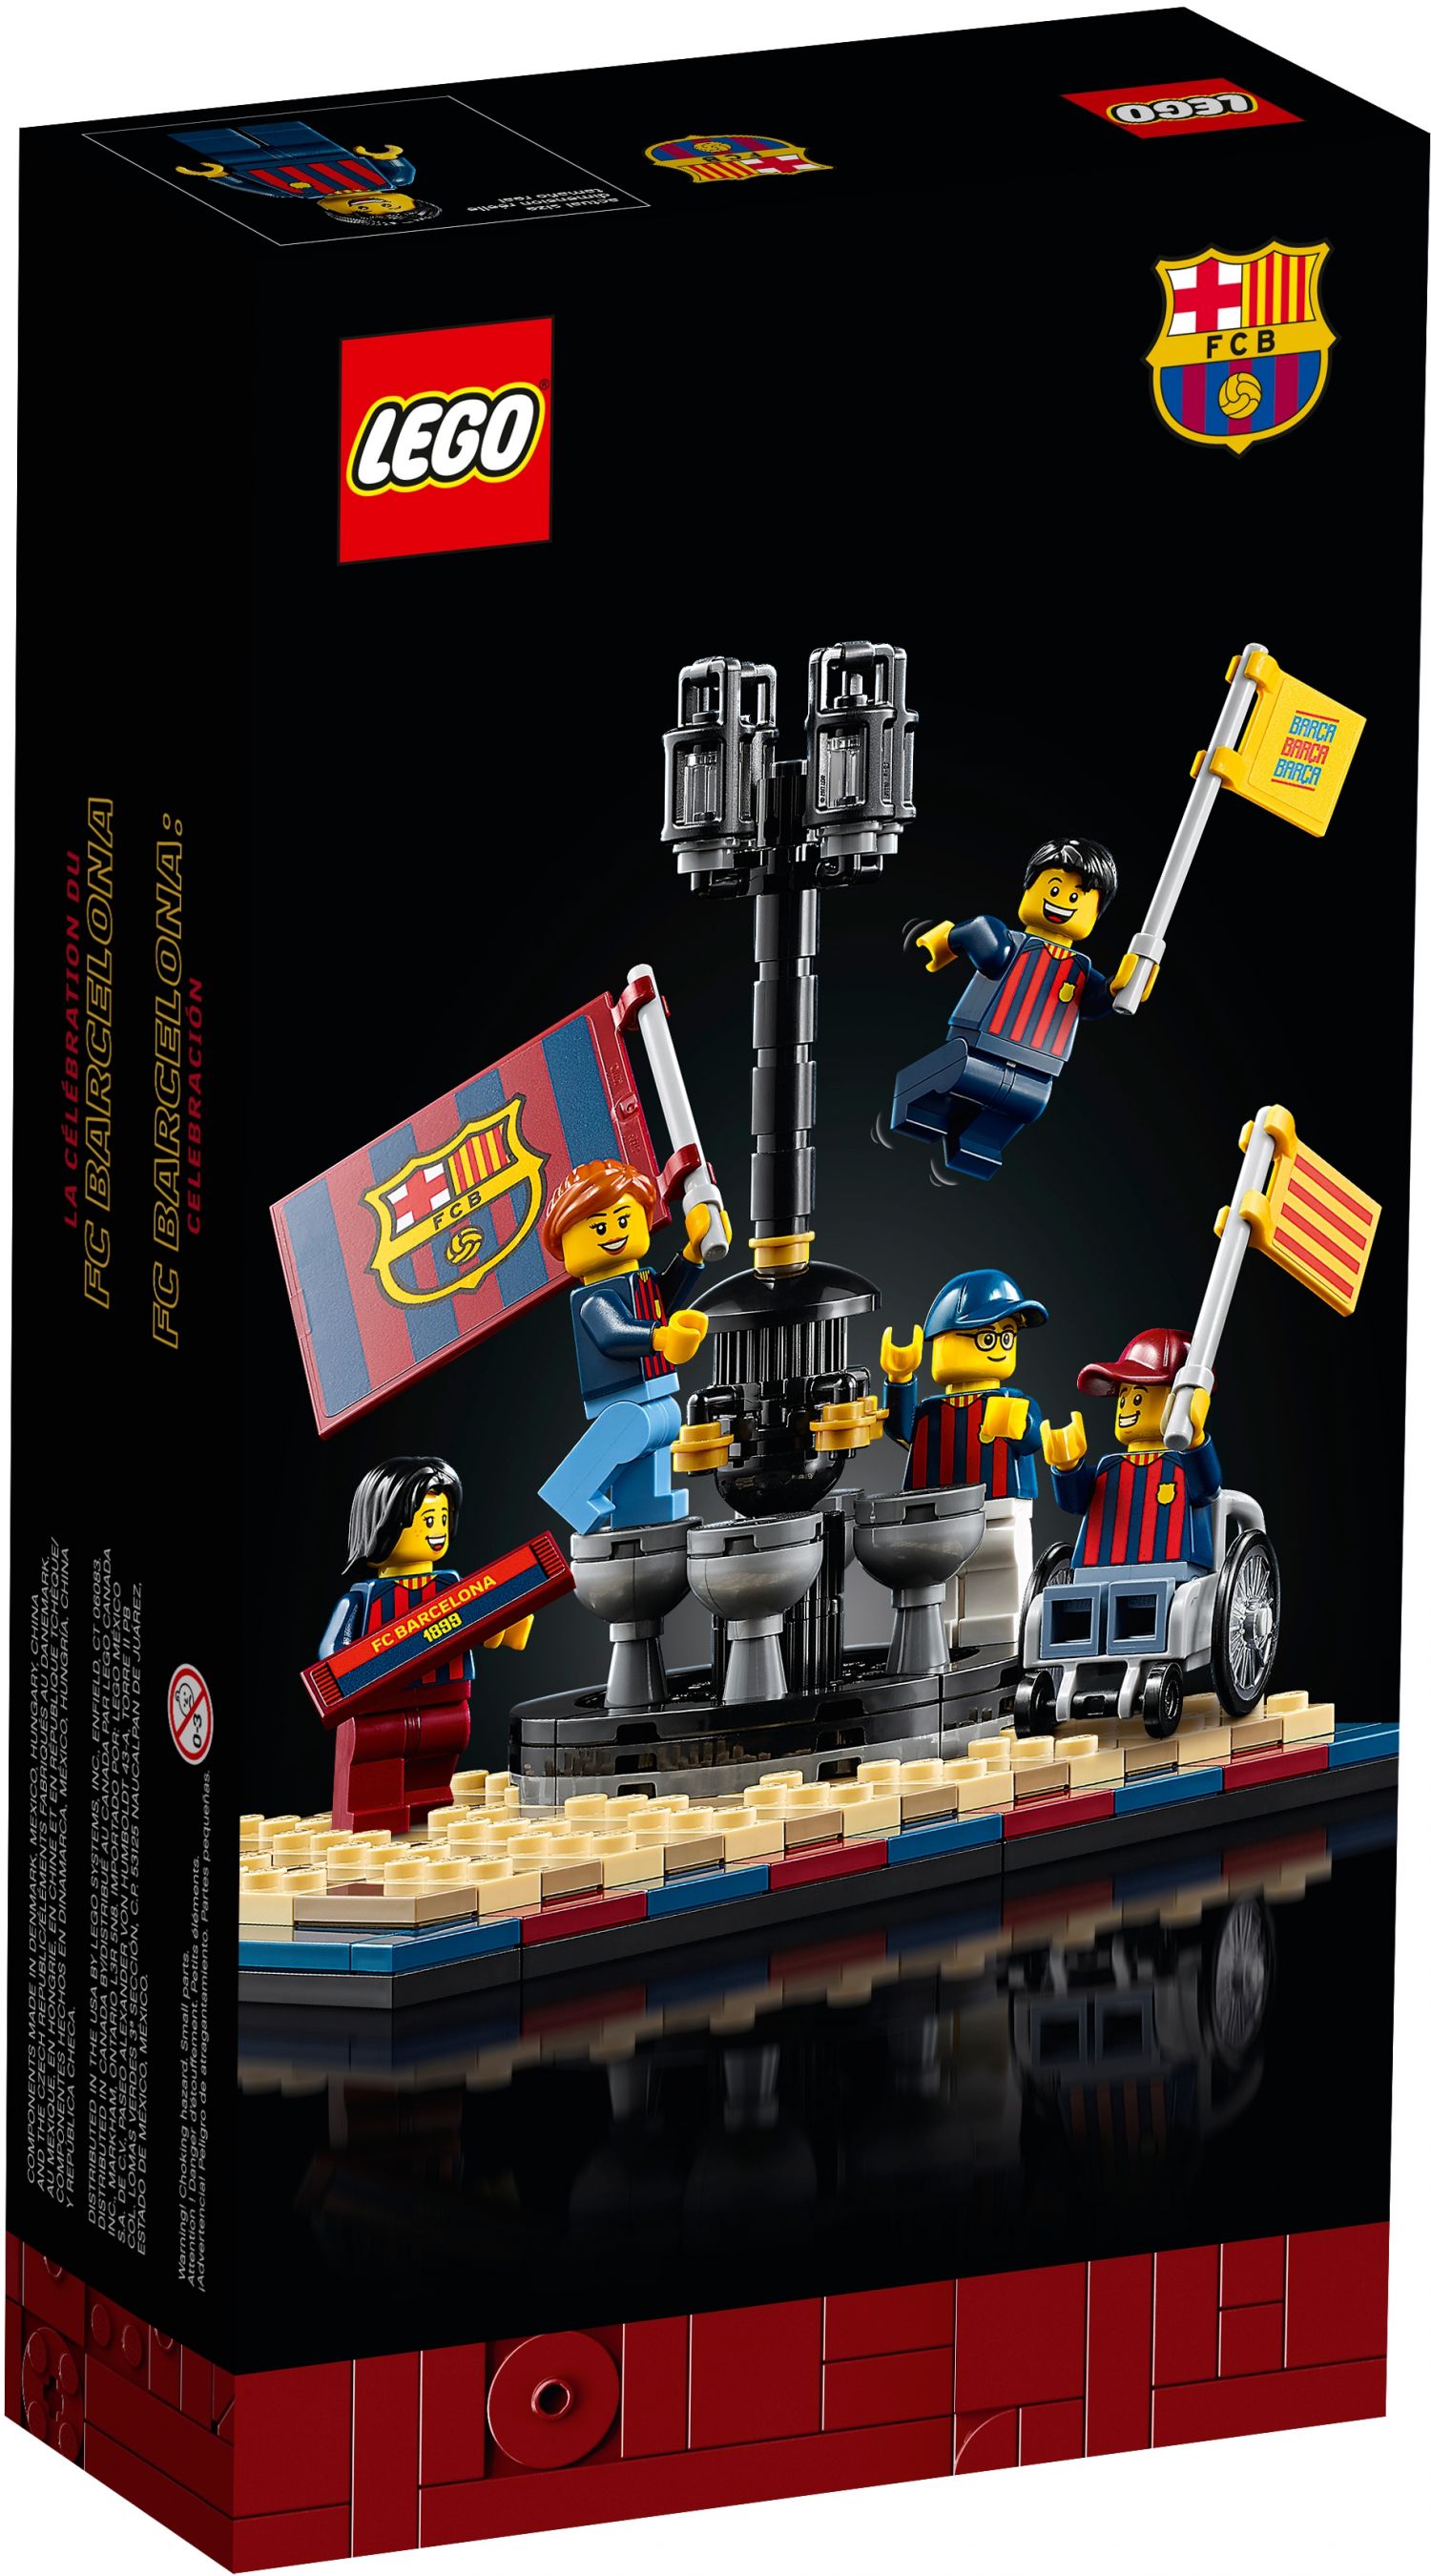 LEGO Miscellaneous 40485 Feier des FC Barcelona LEGO_40485_alt2.jpg